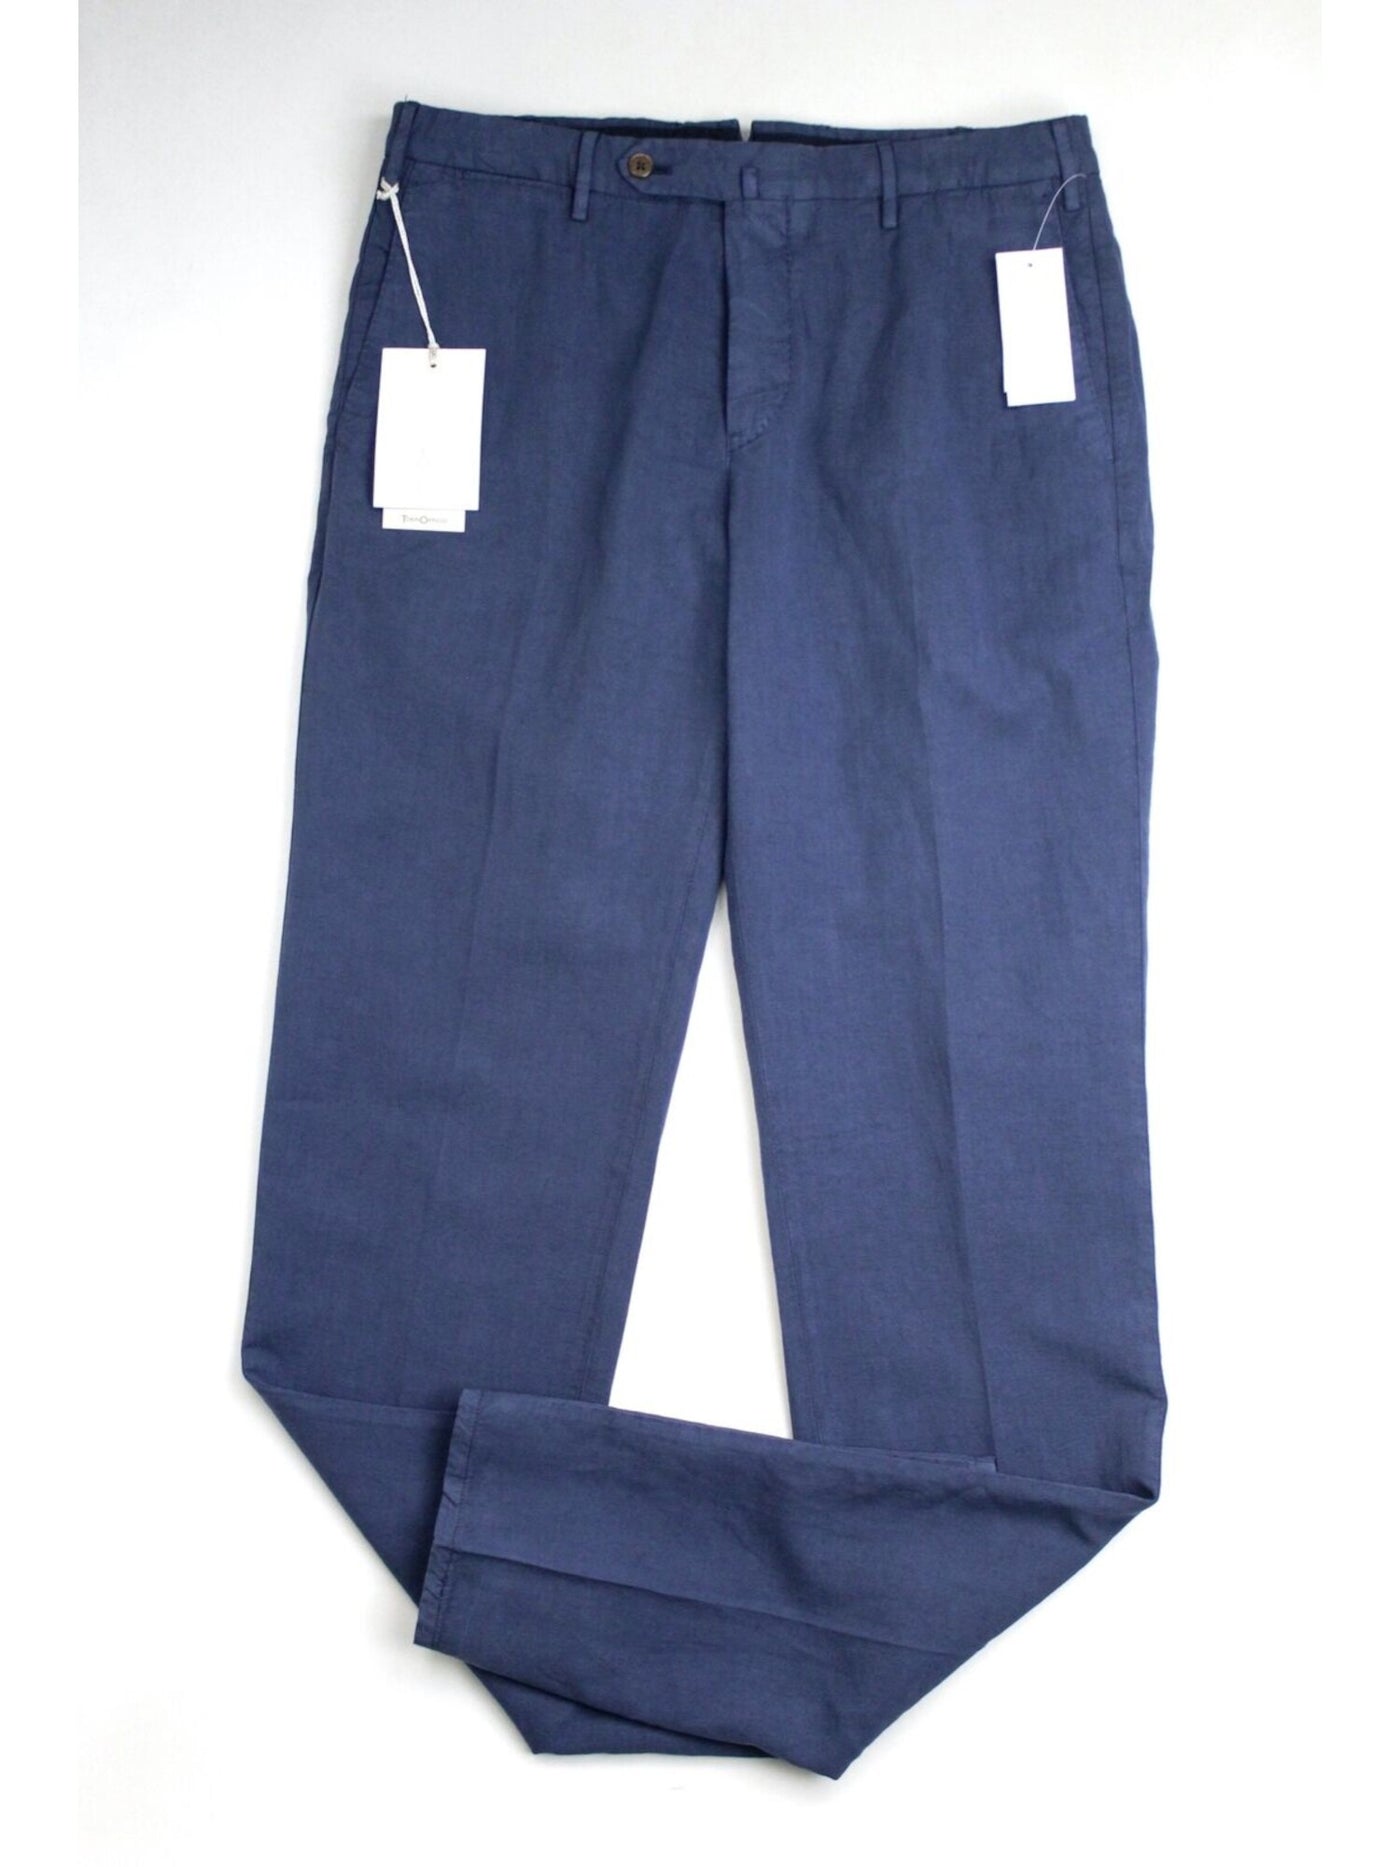 TORIN OPIFICIO Mens Blue Straight Leg, Classic Fit Cashmere Chino Pants 54